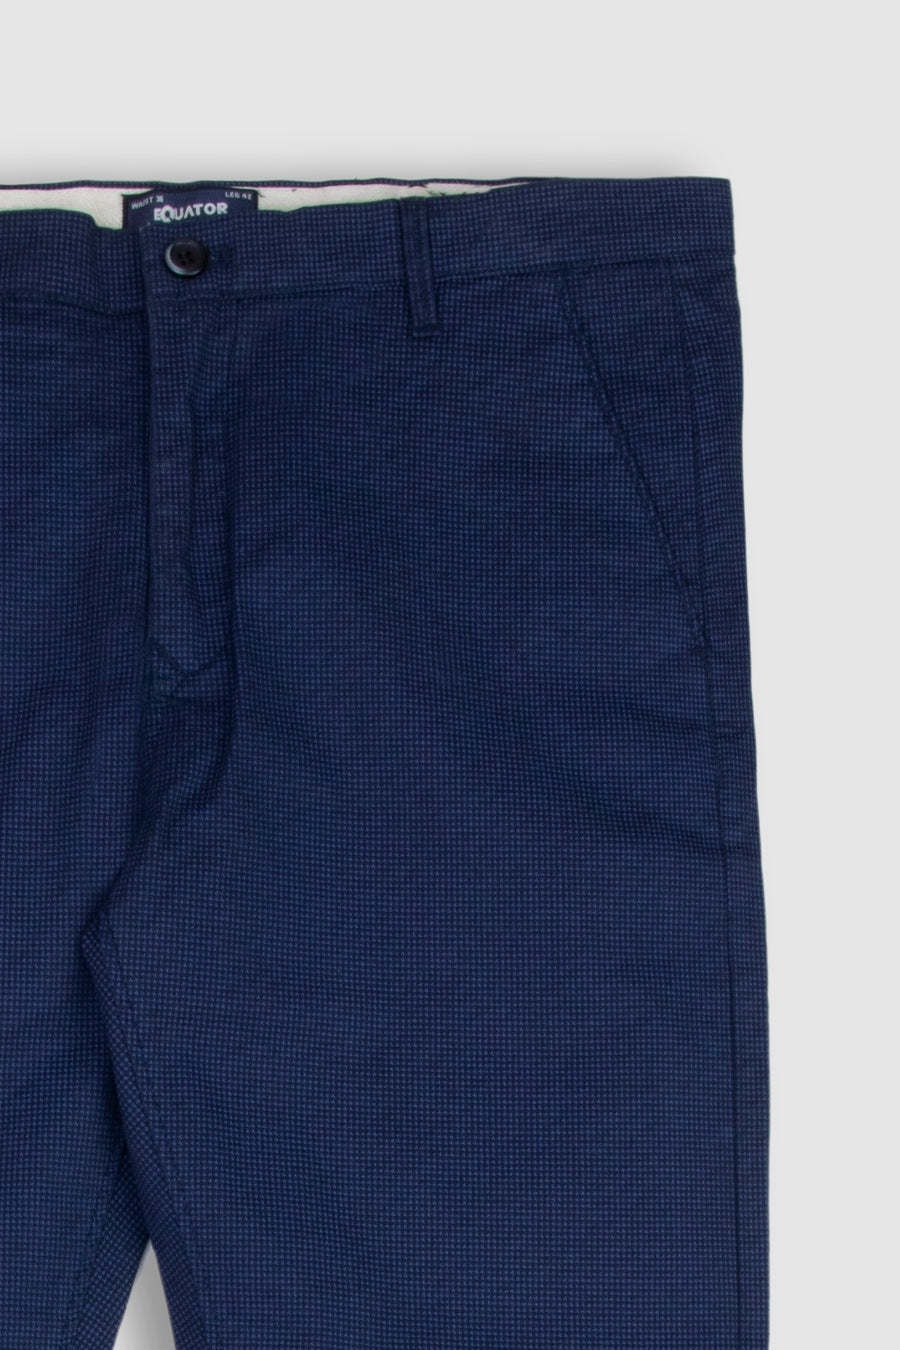 Dark Blue Fashion Pants